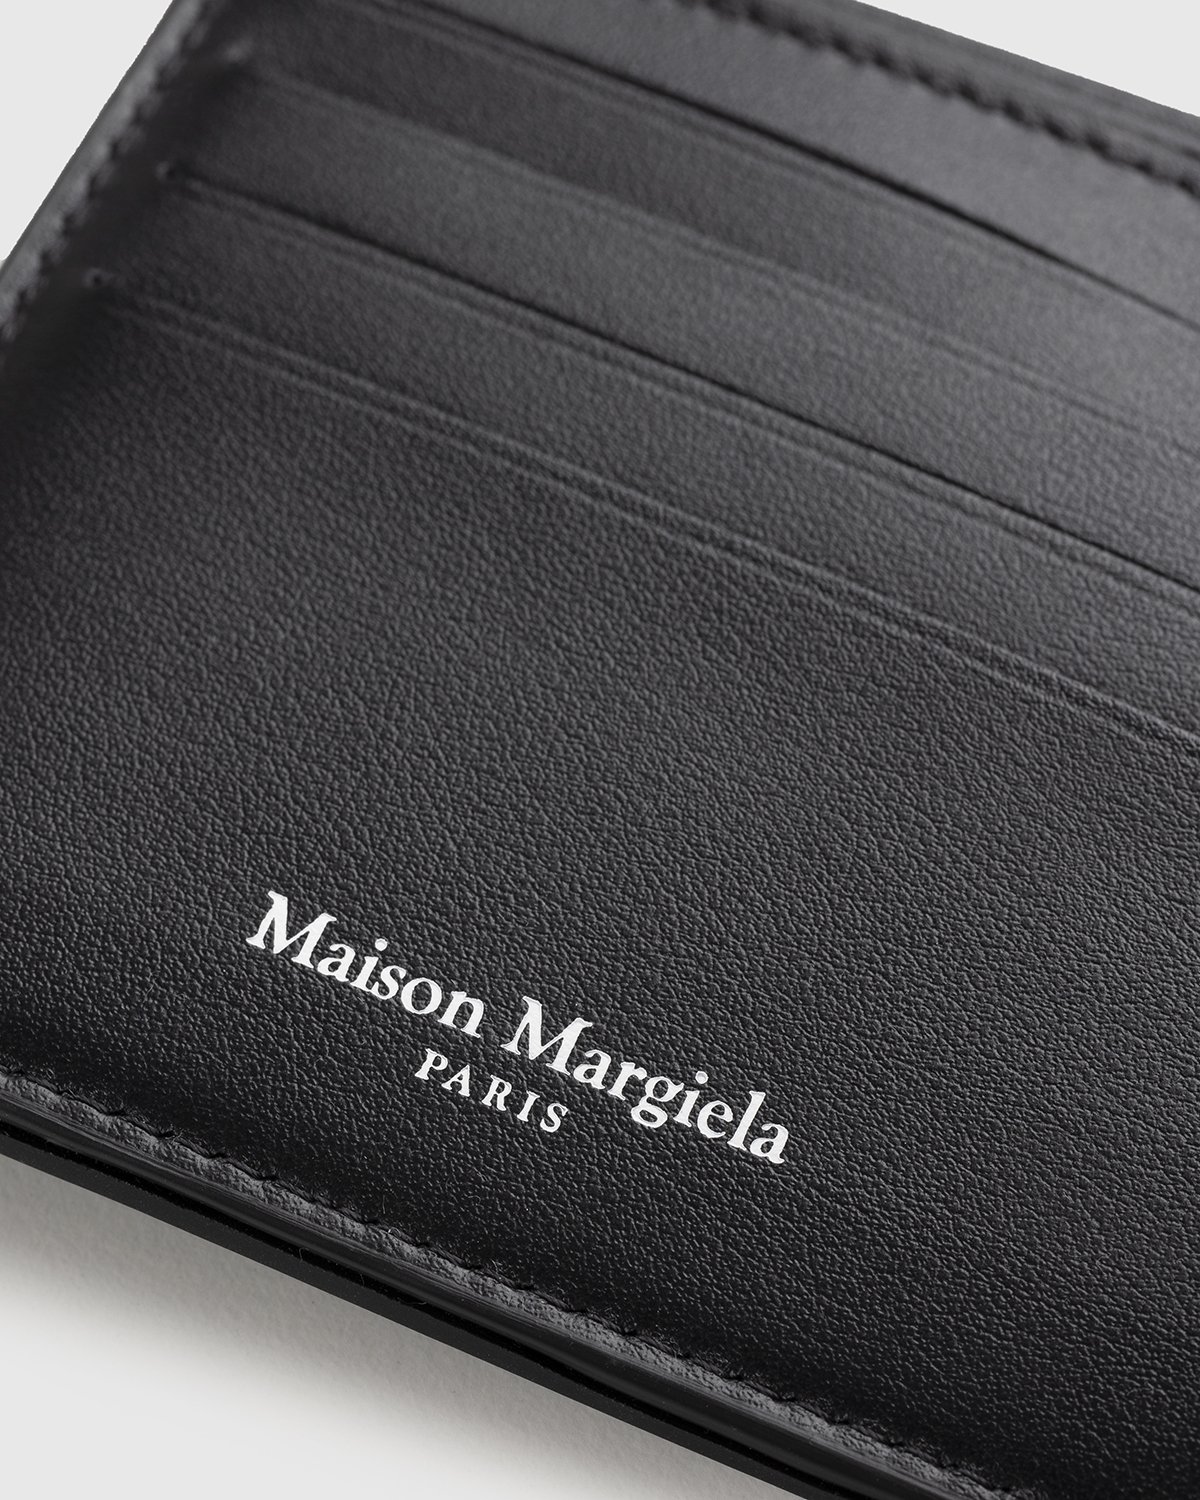 Maison Margiela - Bi-Fold Wallet Black - Accessories - Black - Image 5